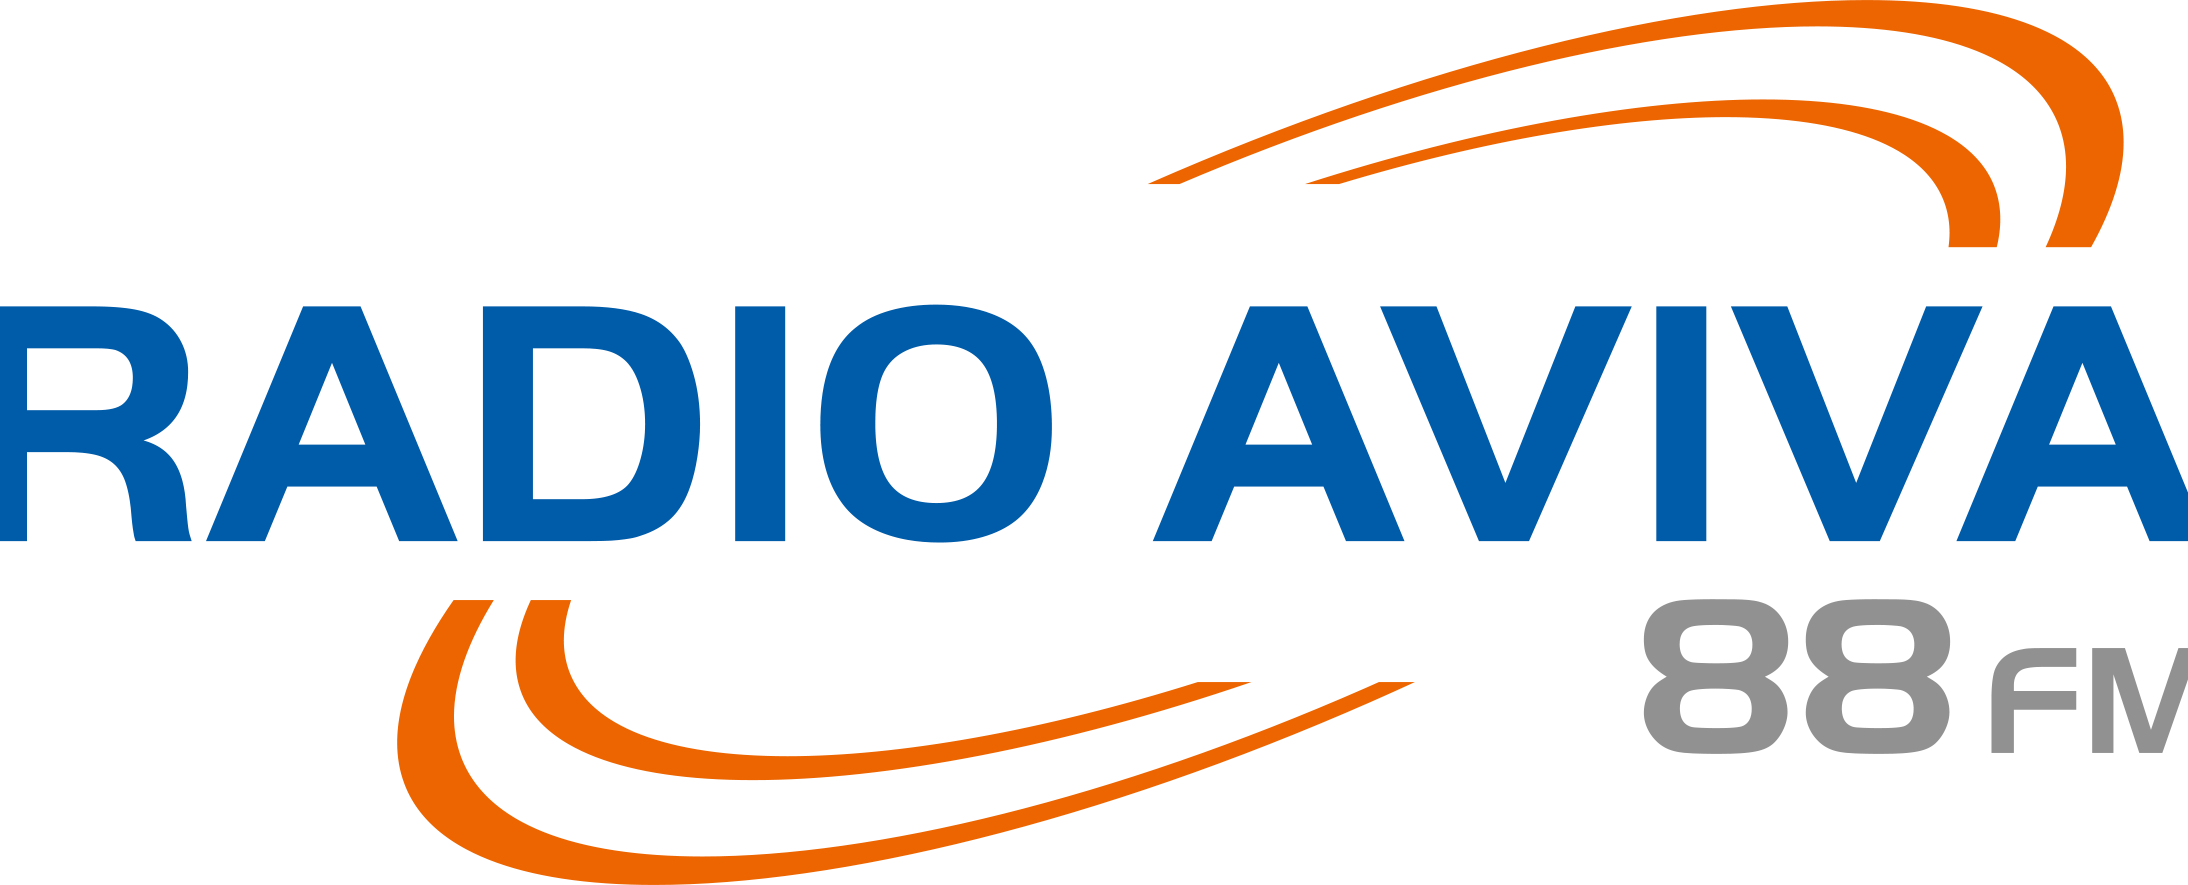 RADIO-AVIVA-LOGO-RECTANGLE.png